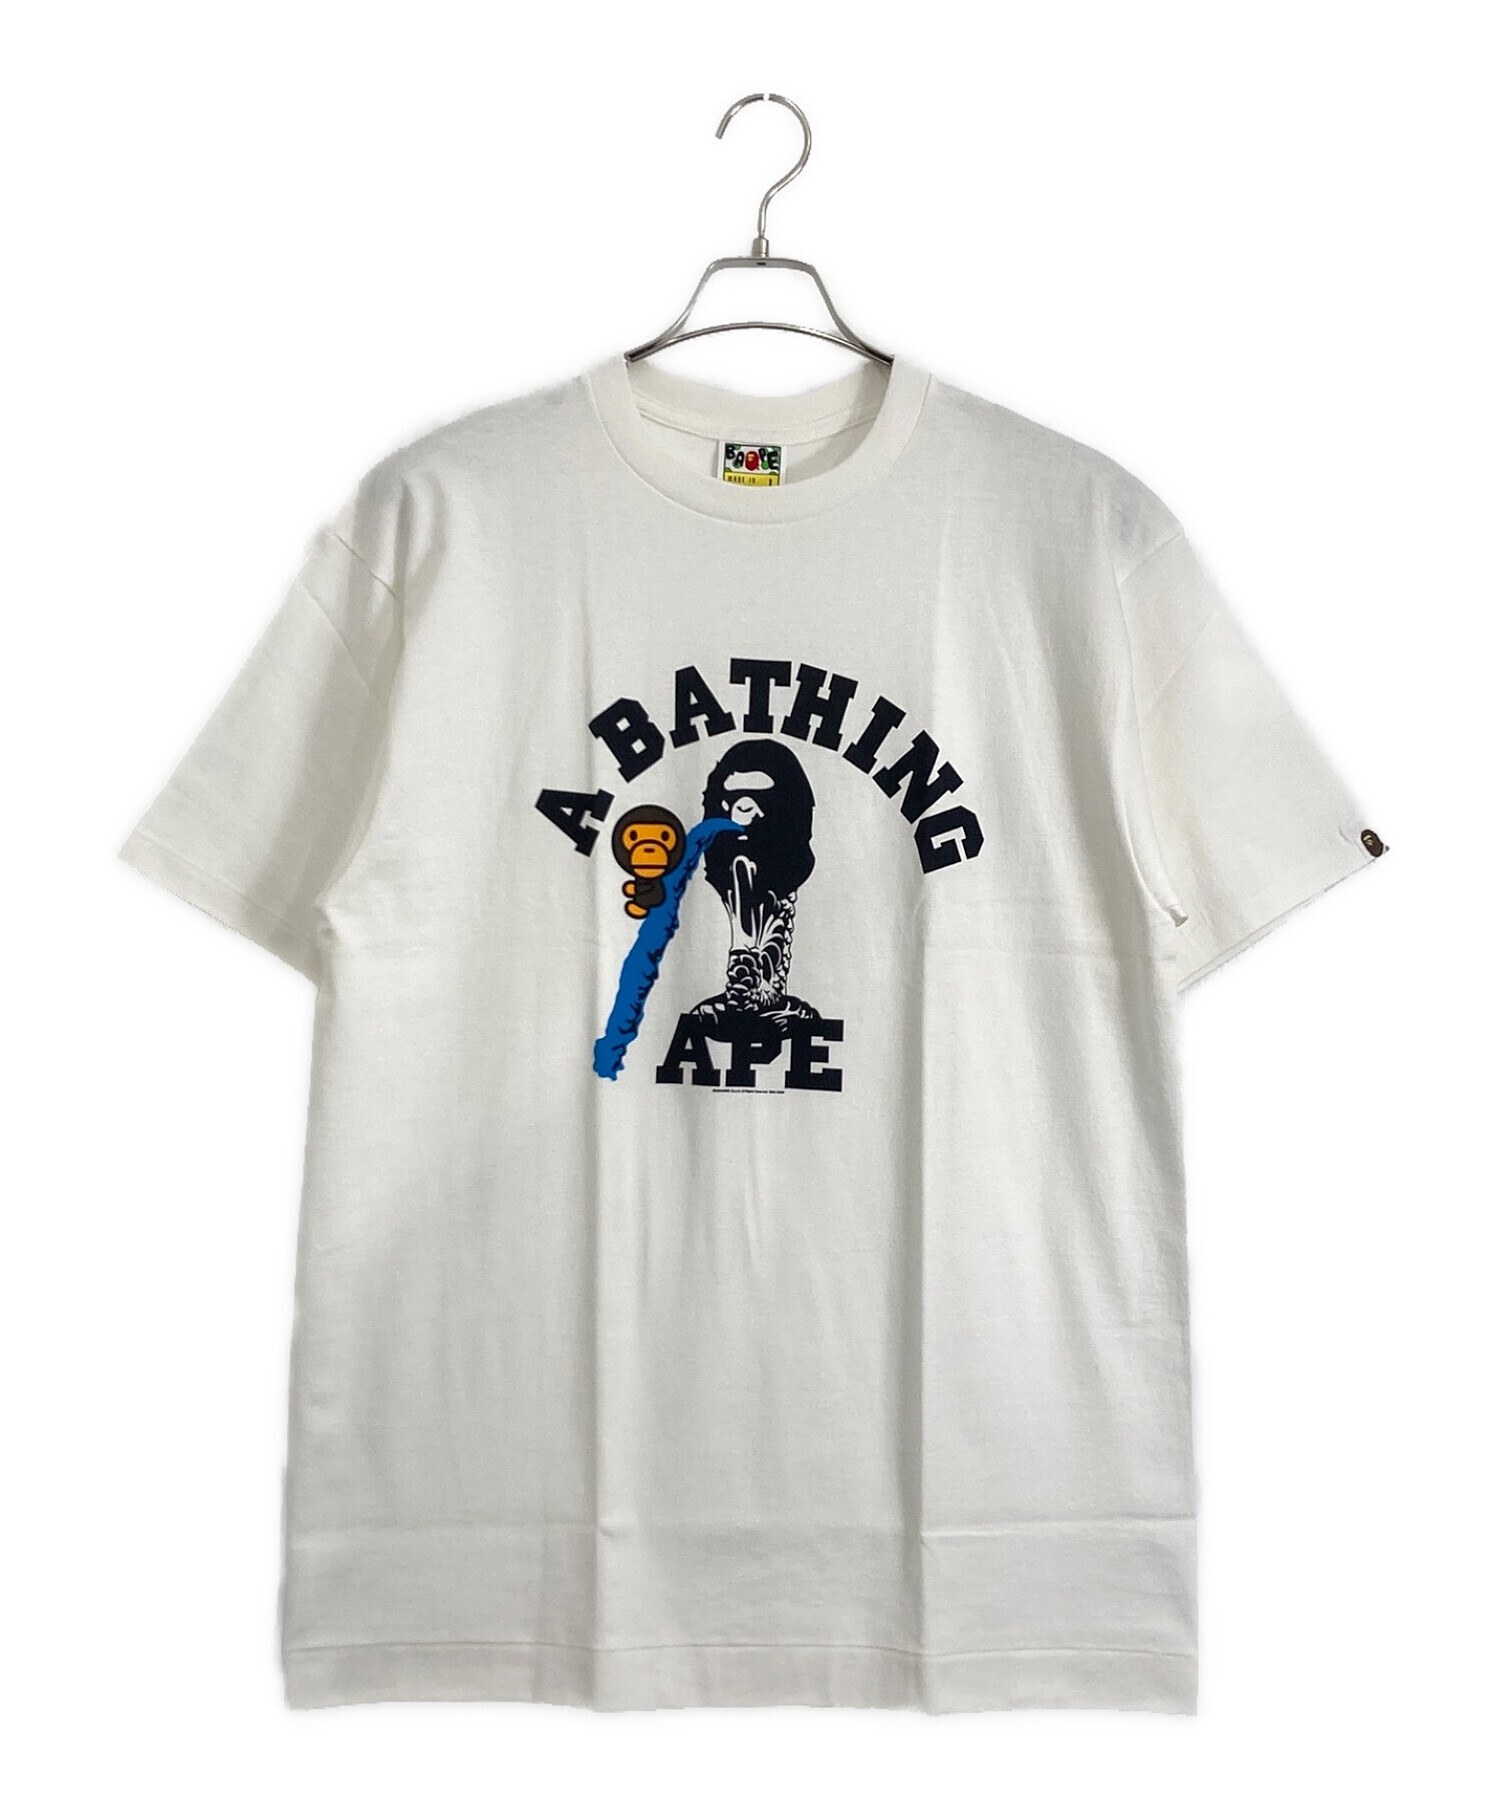 BAPE BY A BATHING APE (ベイプバイアベイシングエイプ) BAPE BY A BATHING APE Tシャツ ホワイト サイズ:L